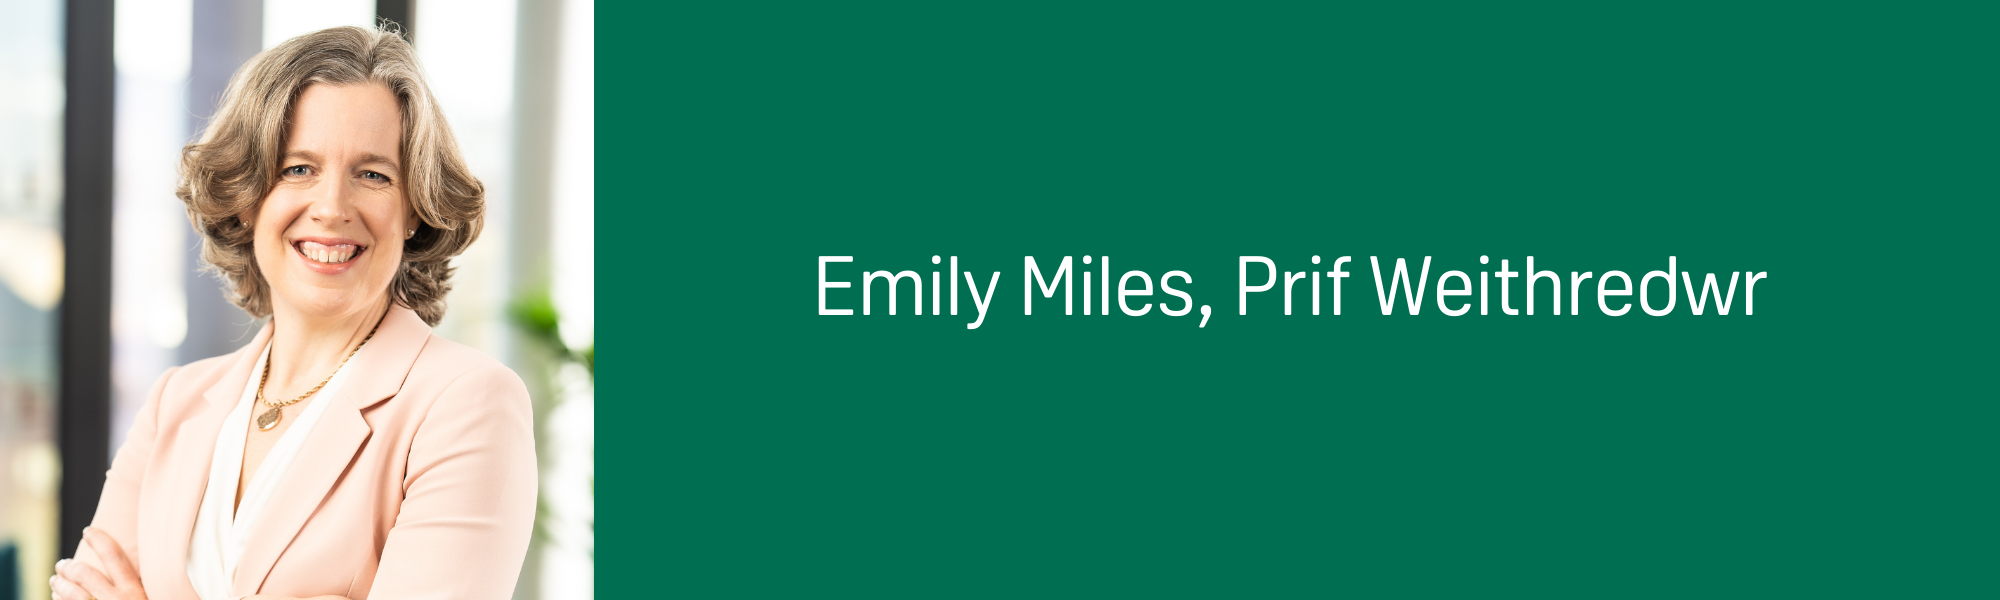 Emily Miles, Prif Weithredwr